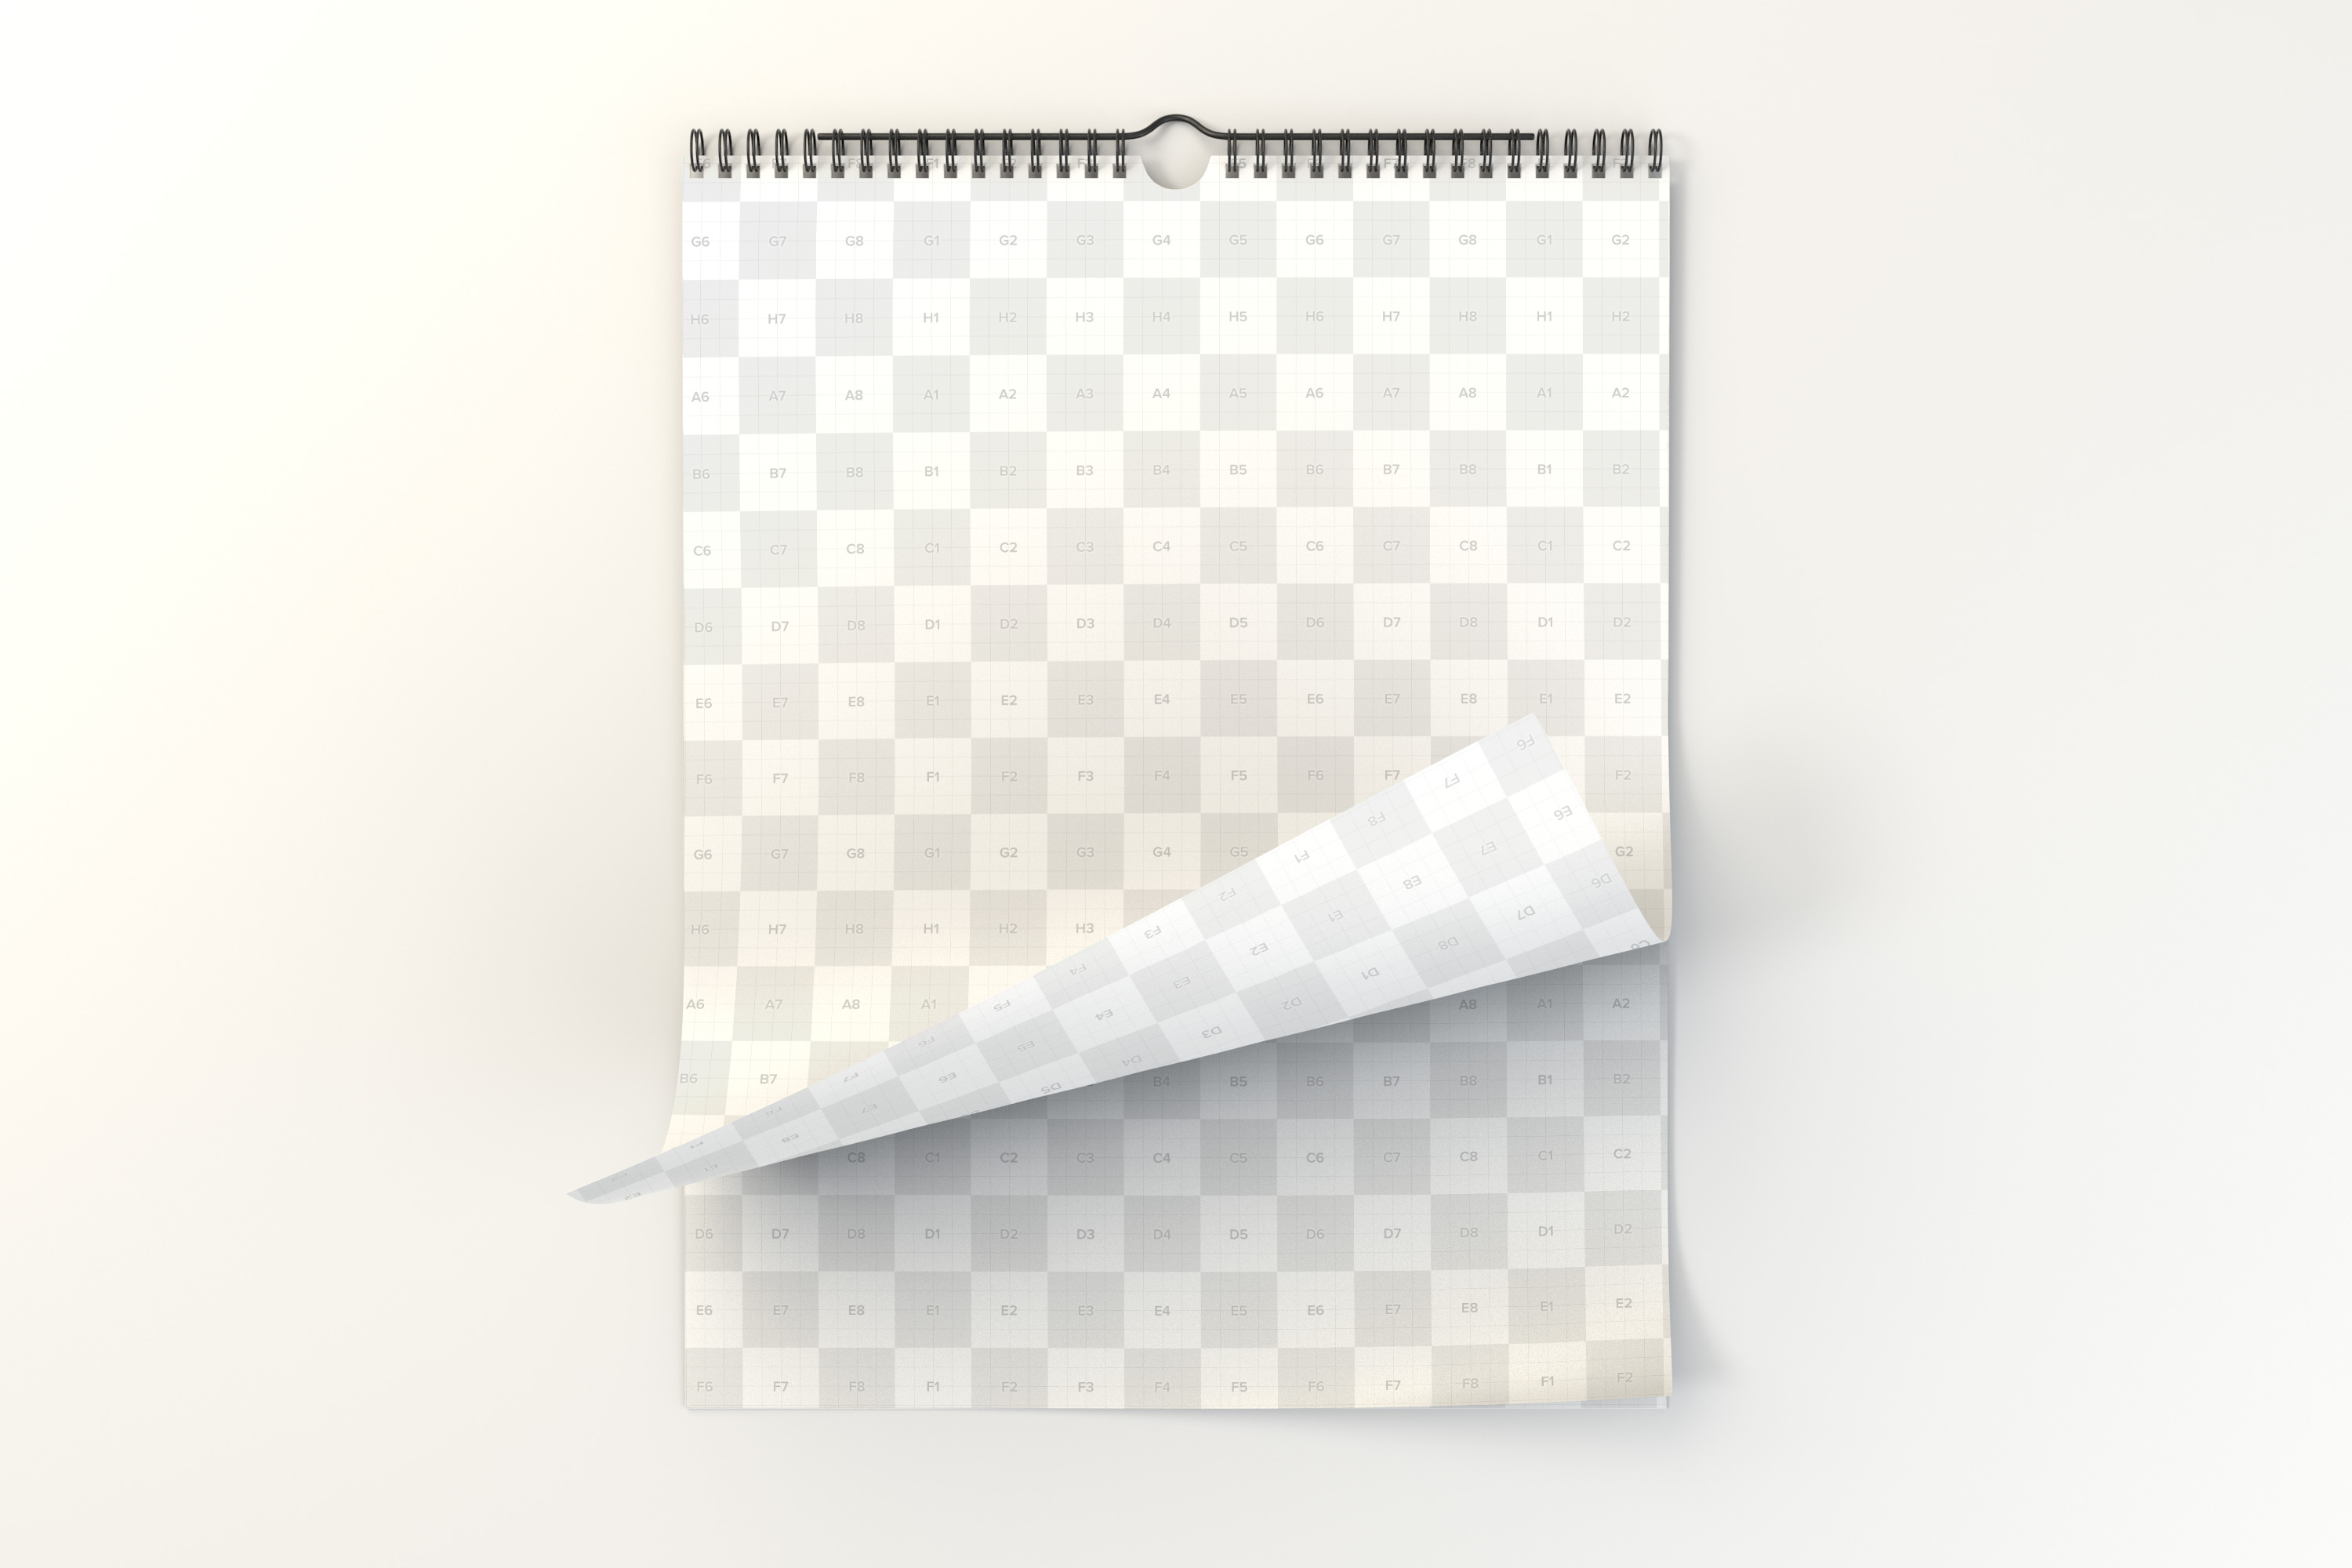 活页挂历翻页效果图样机模板 Wall Portrait Calendar Rolled Page Mockup插图(1)